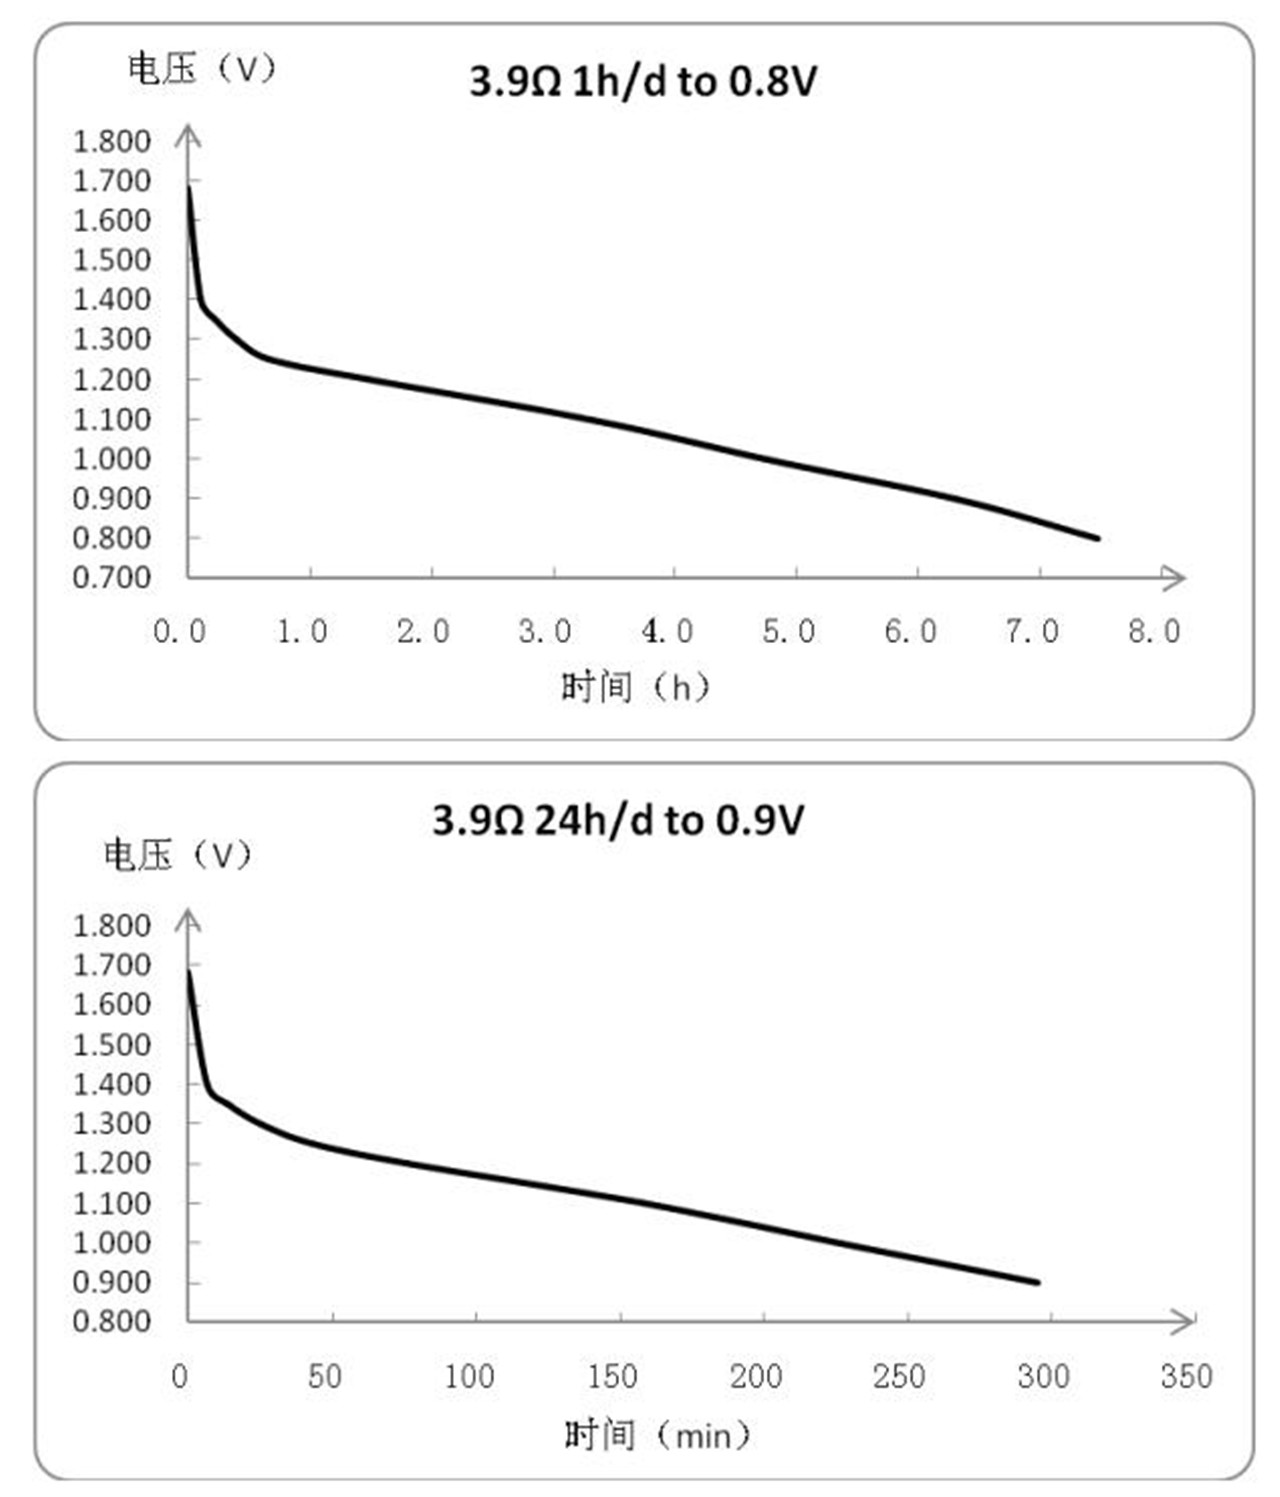 China High Quality Ultra Alkaline Battery - DG Sunmo 1.5V LR14 AM2 Alkaline  C Battery – Sunmol Manufacturer and Supplier